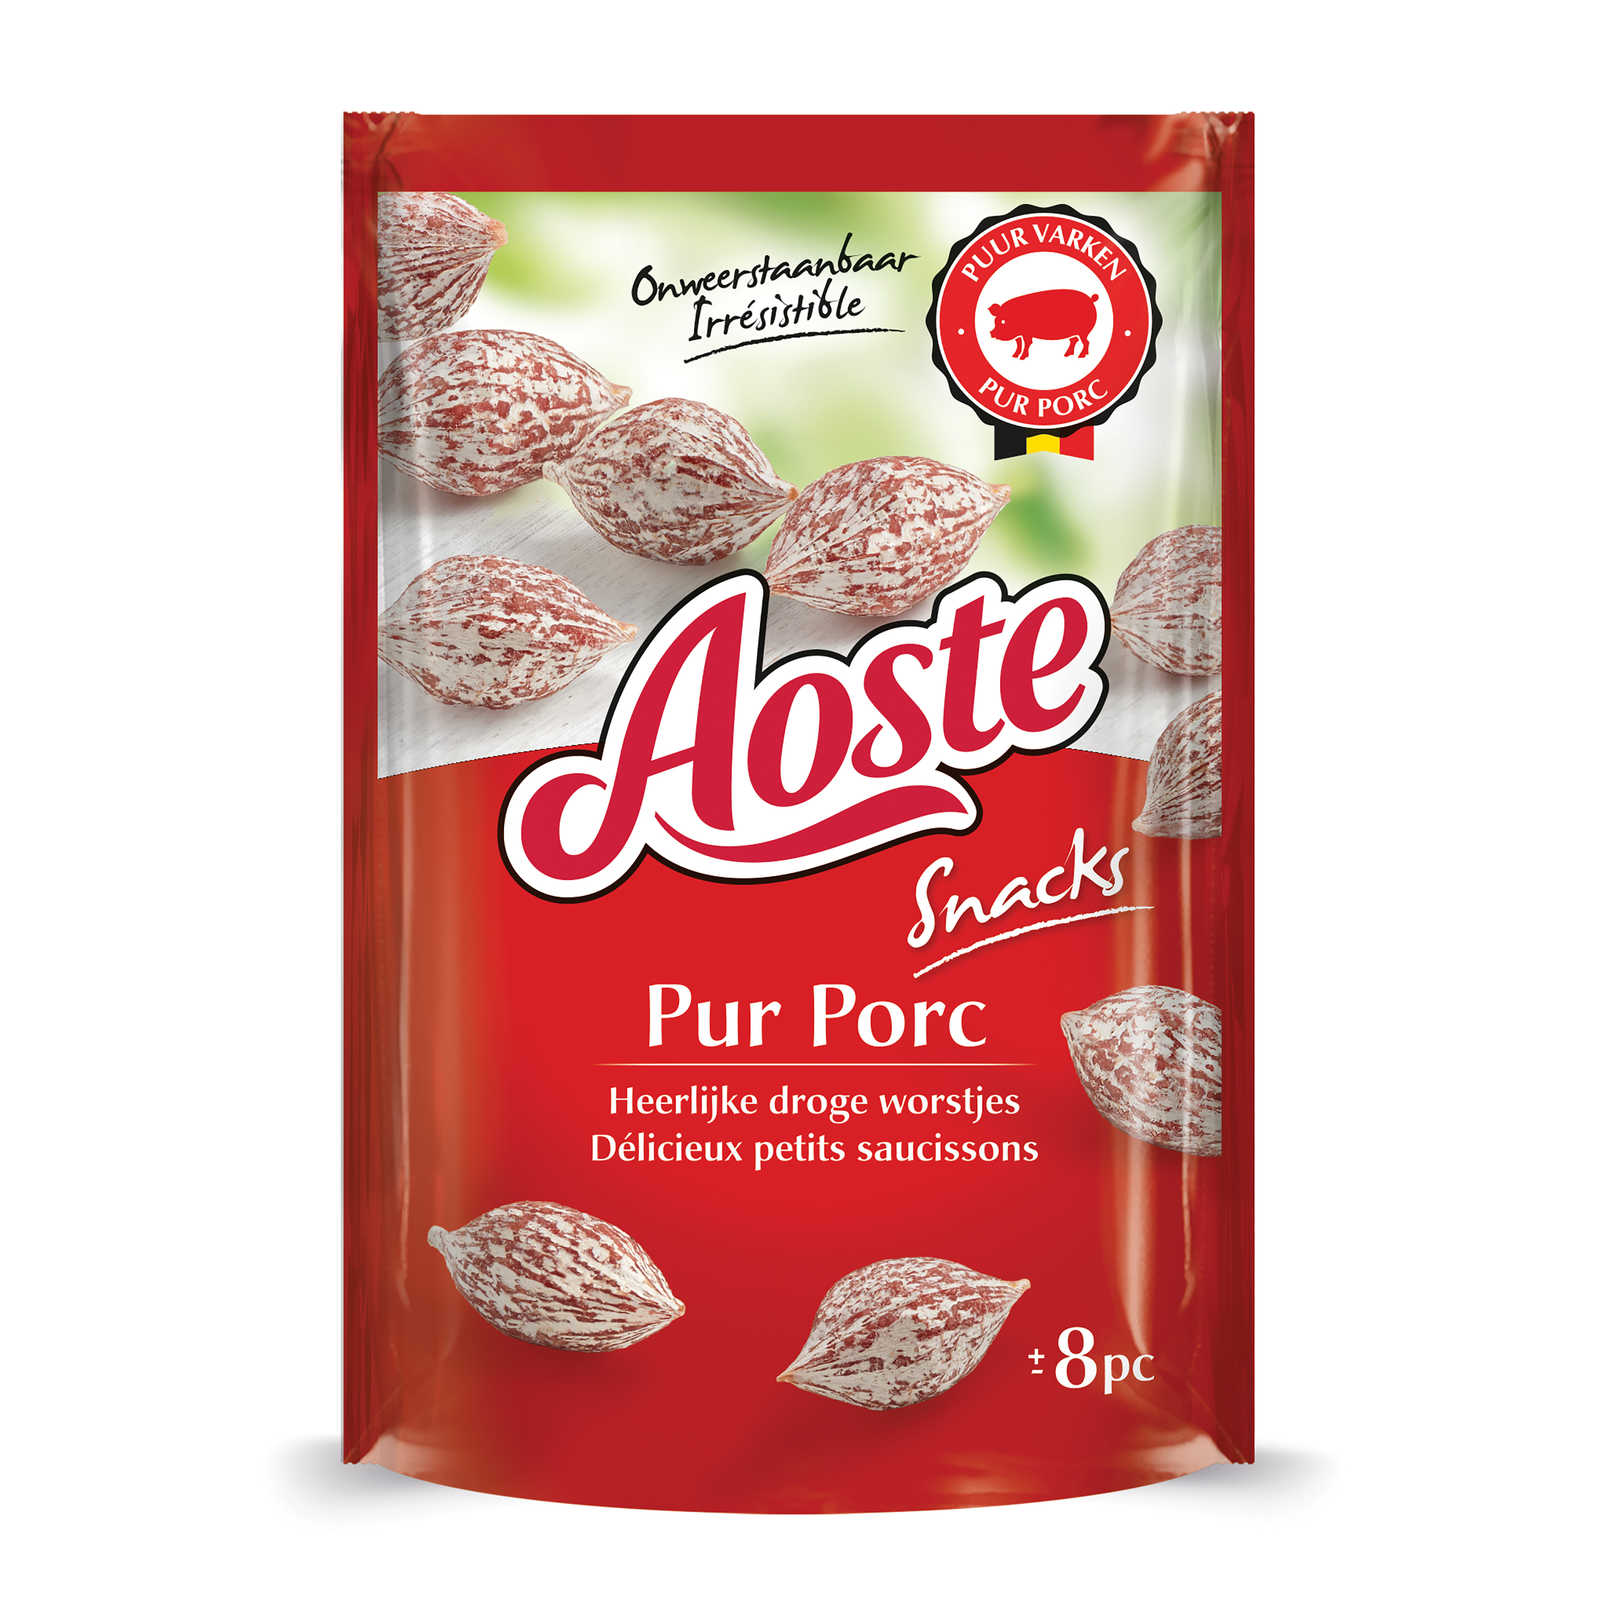 Aoste-Snack